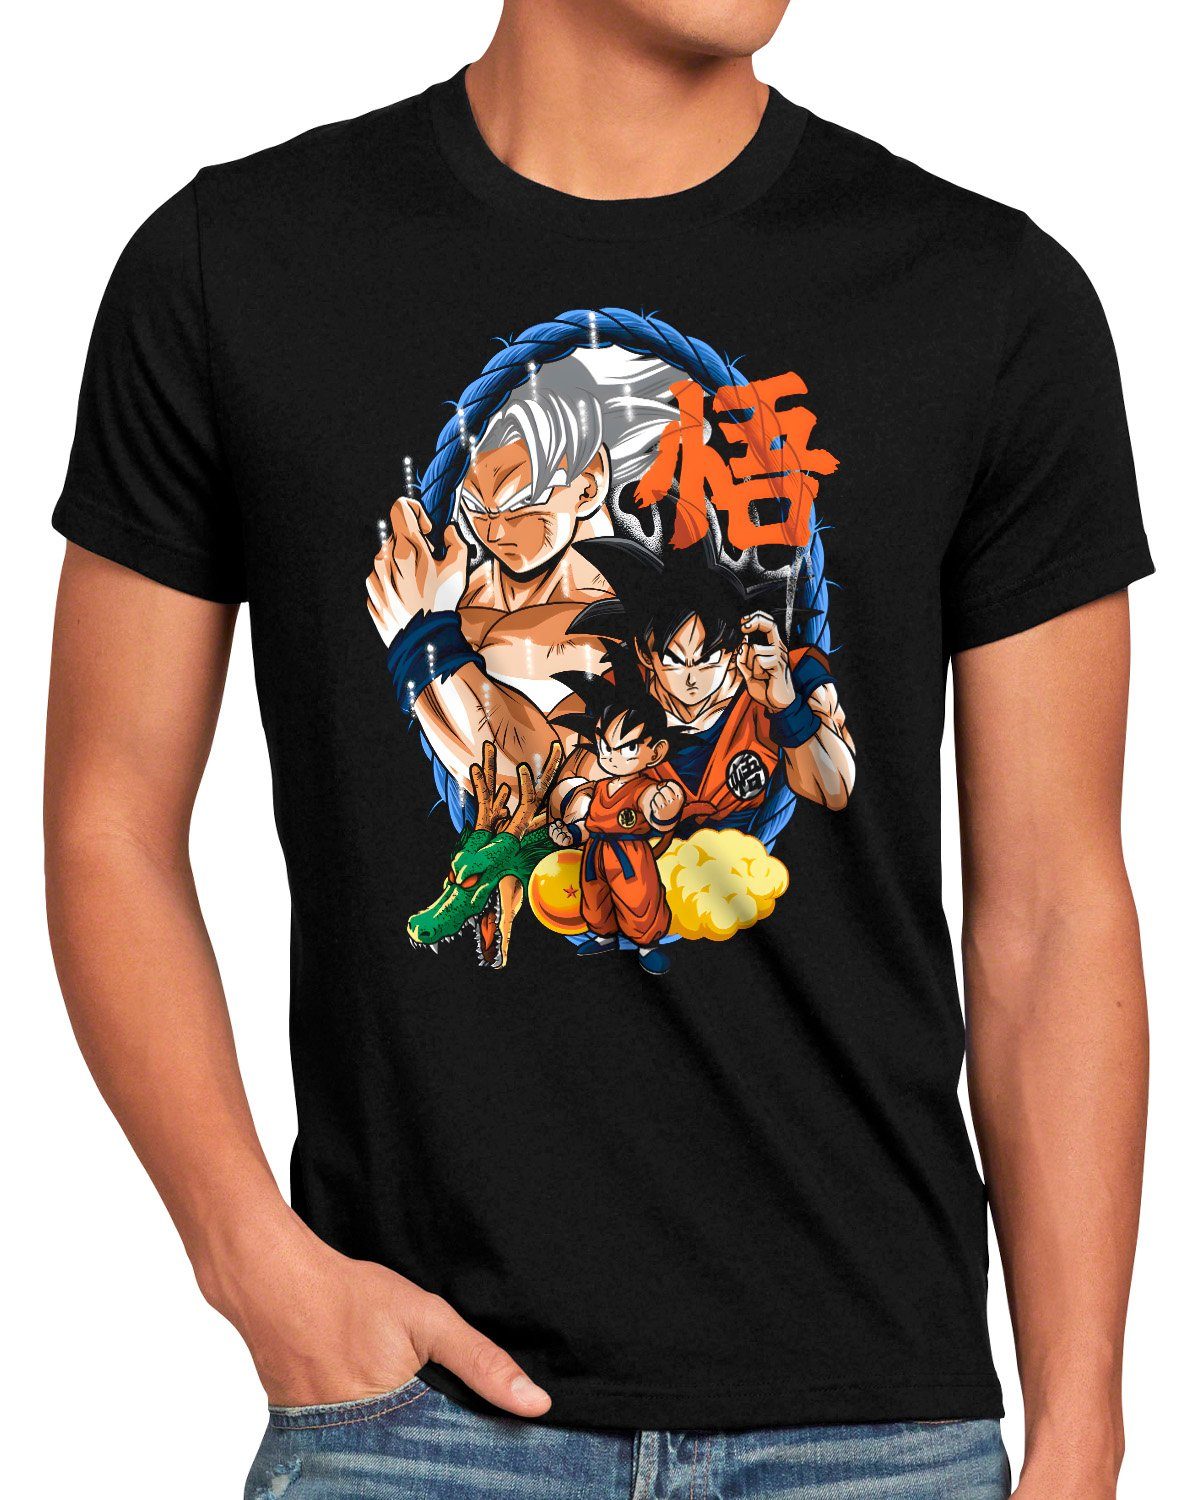 T-Shirt dragonball Evolution kakarot Print-Shirt super Saiyan breakers Herren the style3 gt songoku z